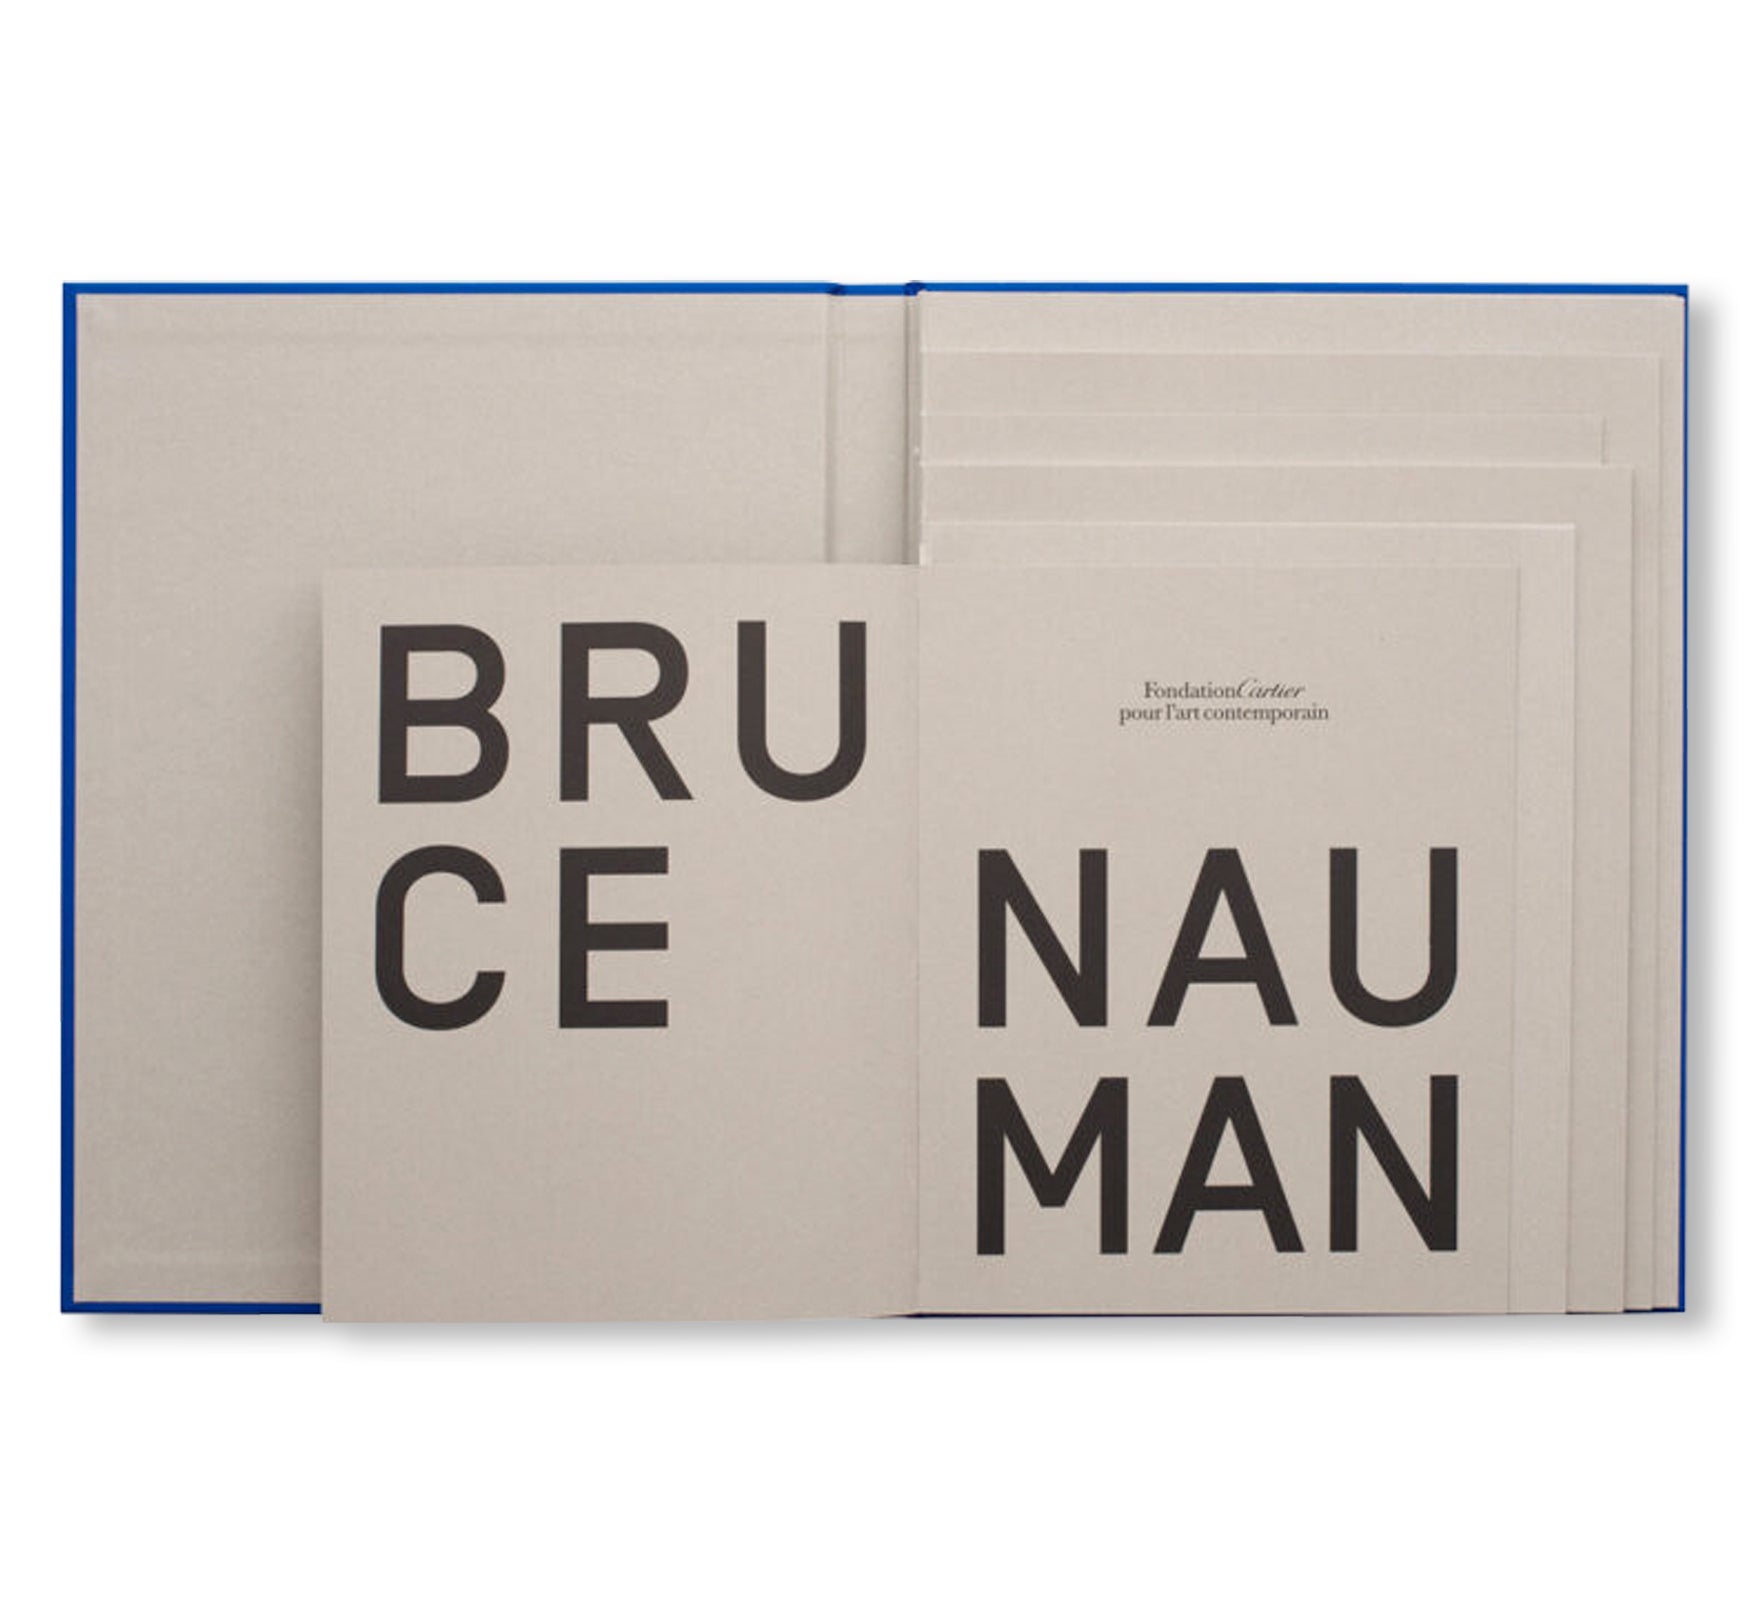 BRUCE NAUMAN by Bruce Nauman